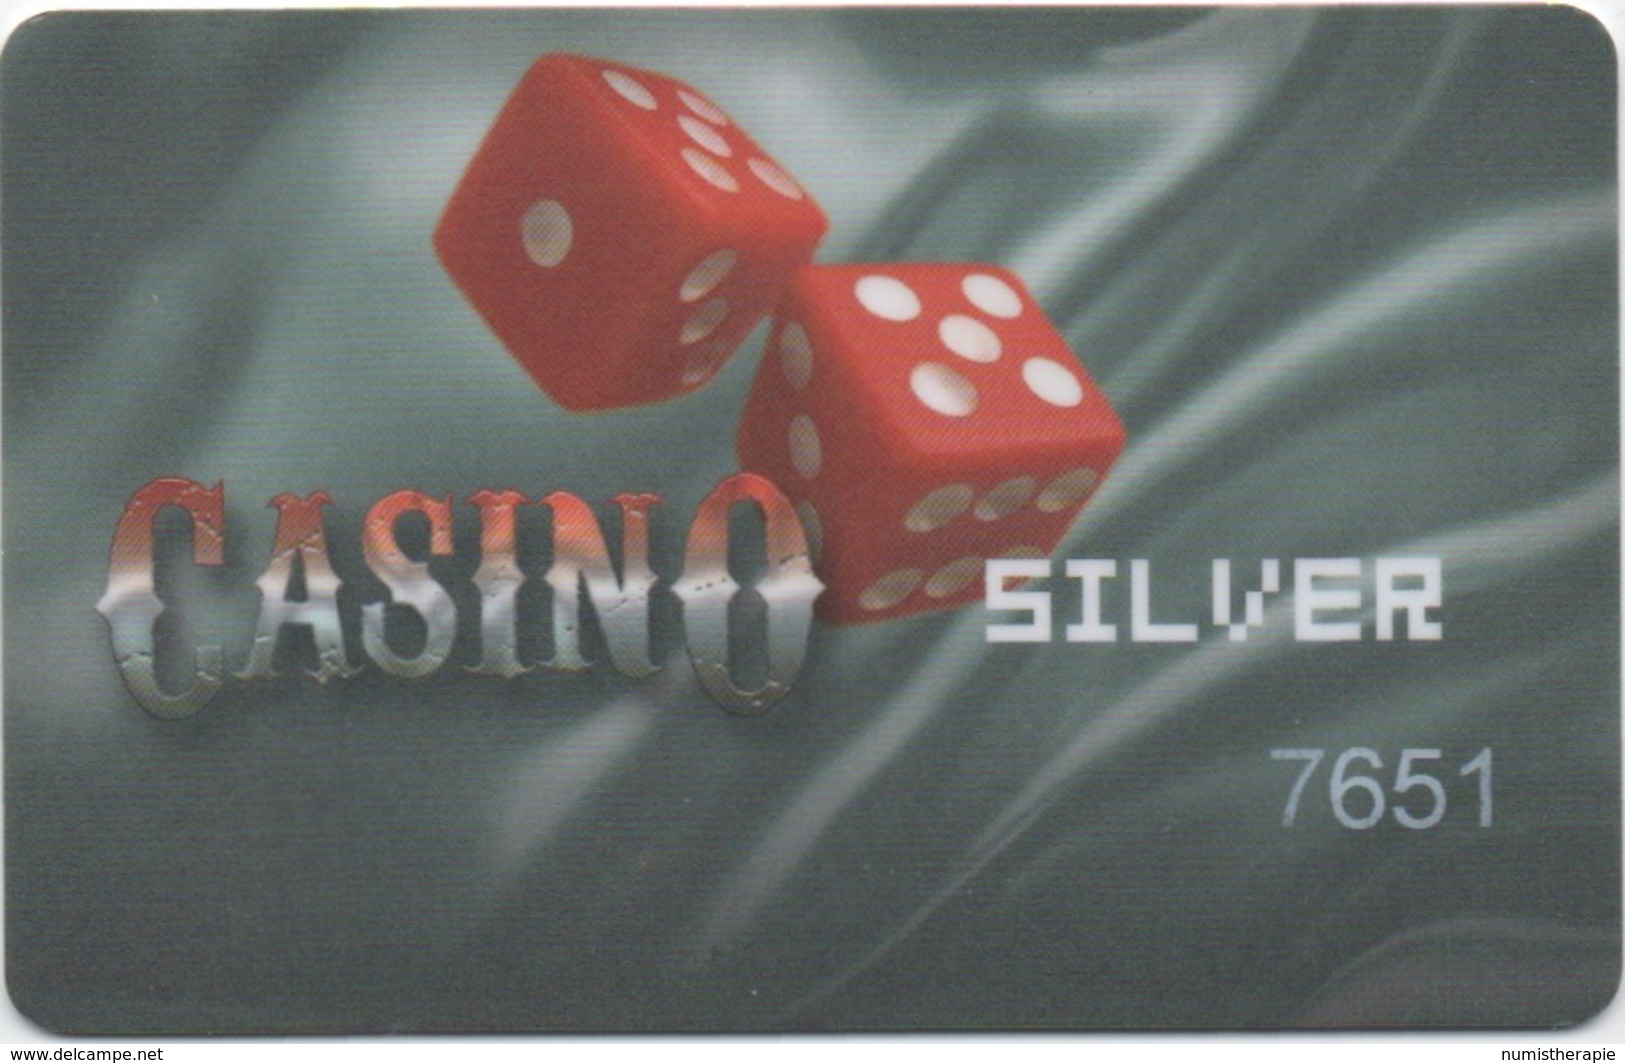 Bulgarie : Carte De Membre Casino Silver #7651 - Cartes De Casino